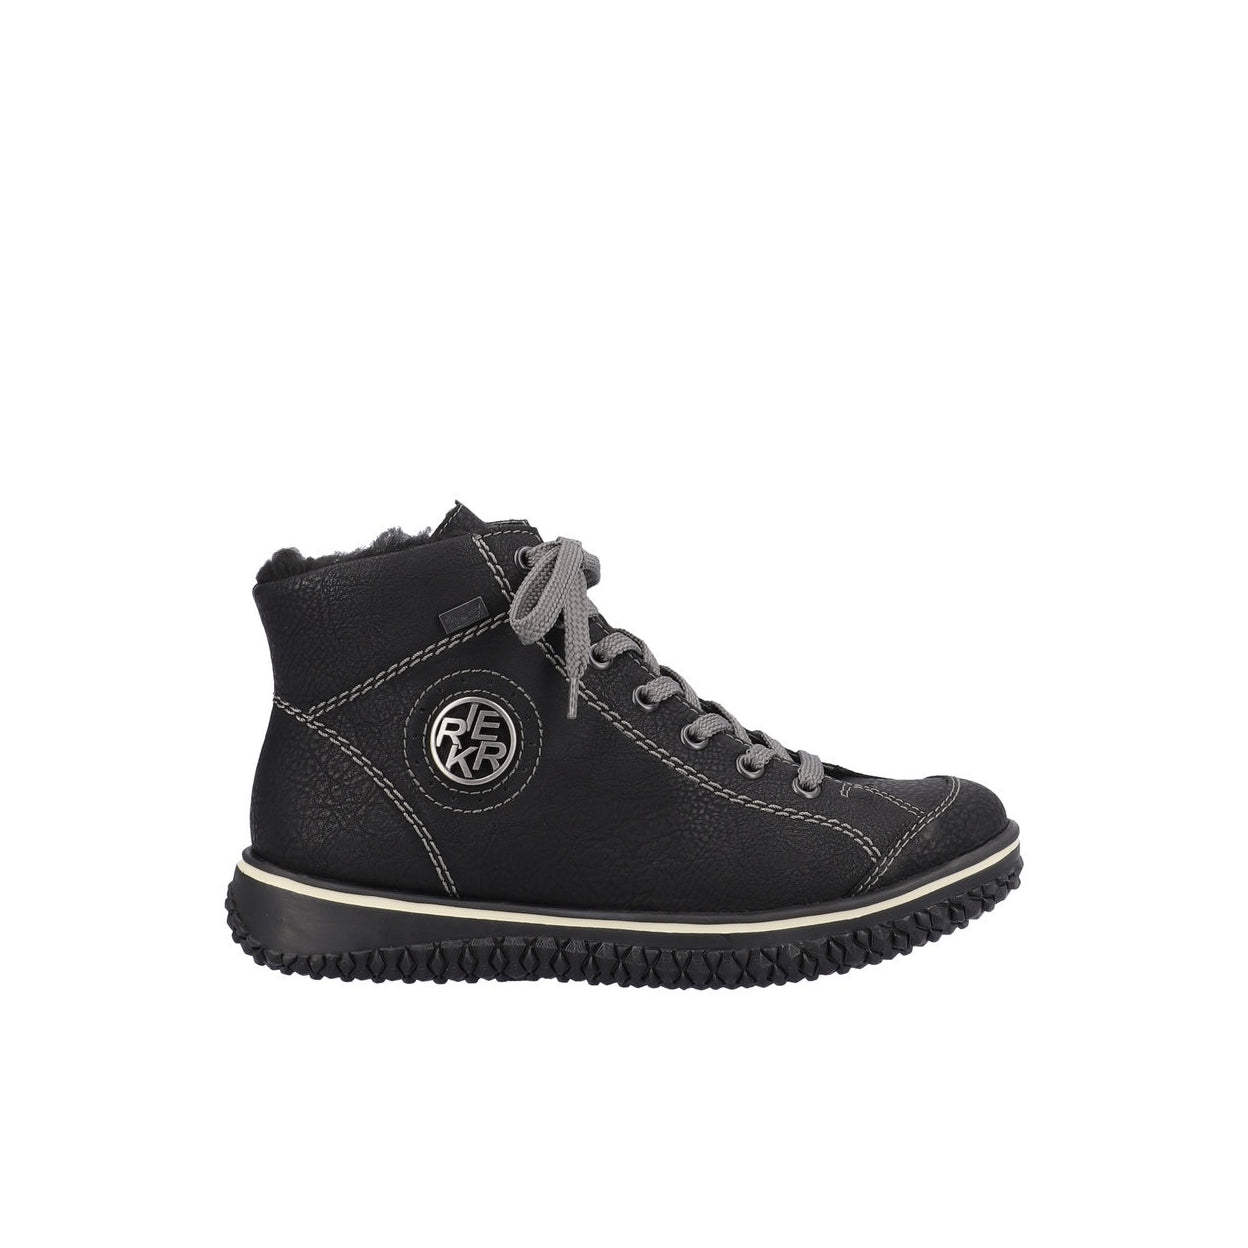 Rieker - Cordula 07 - Waterproof Sneaker Boot - Black